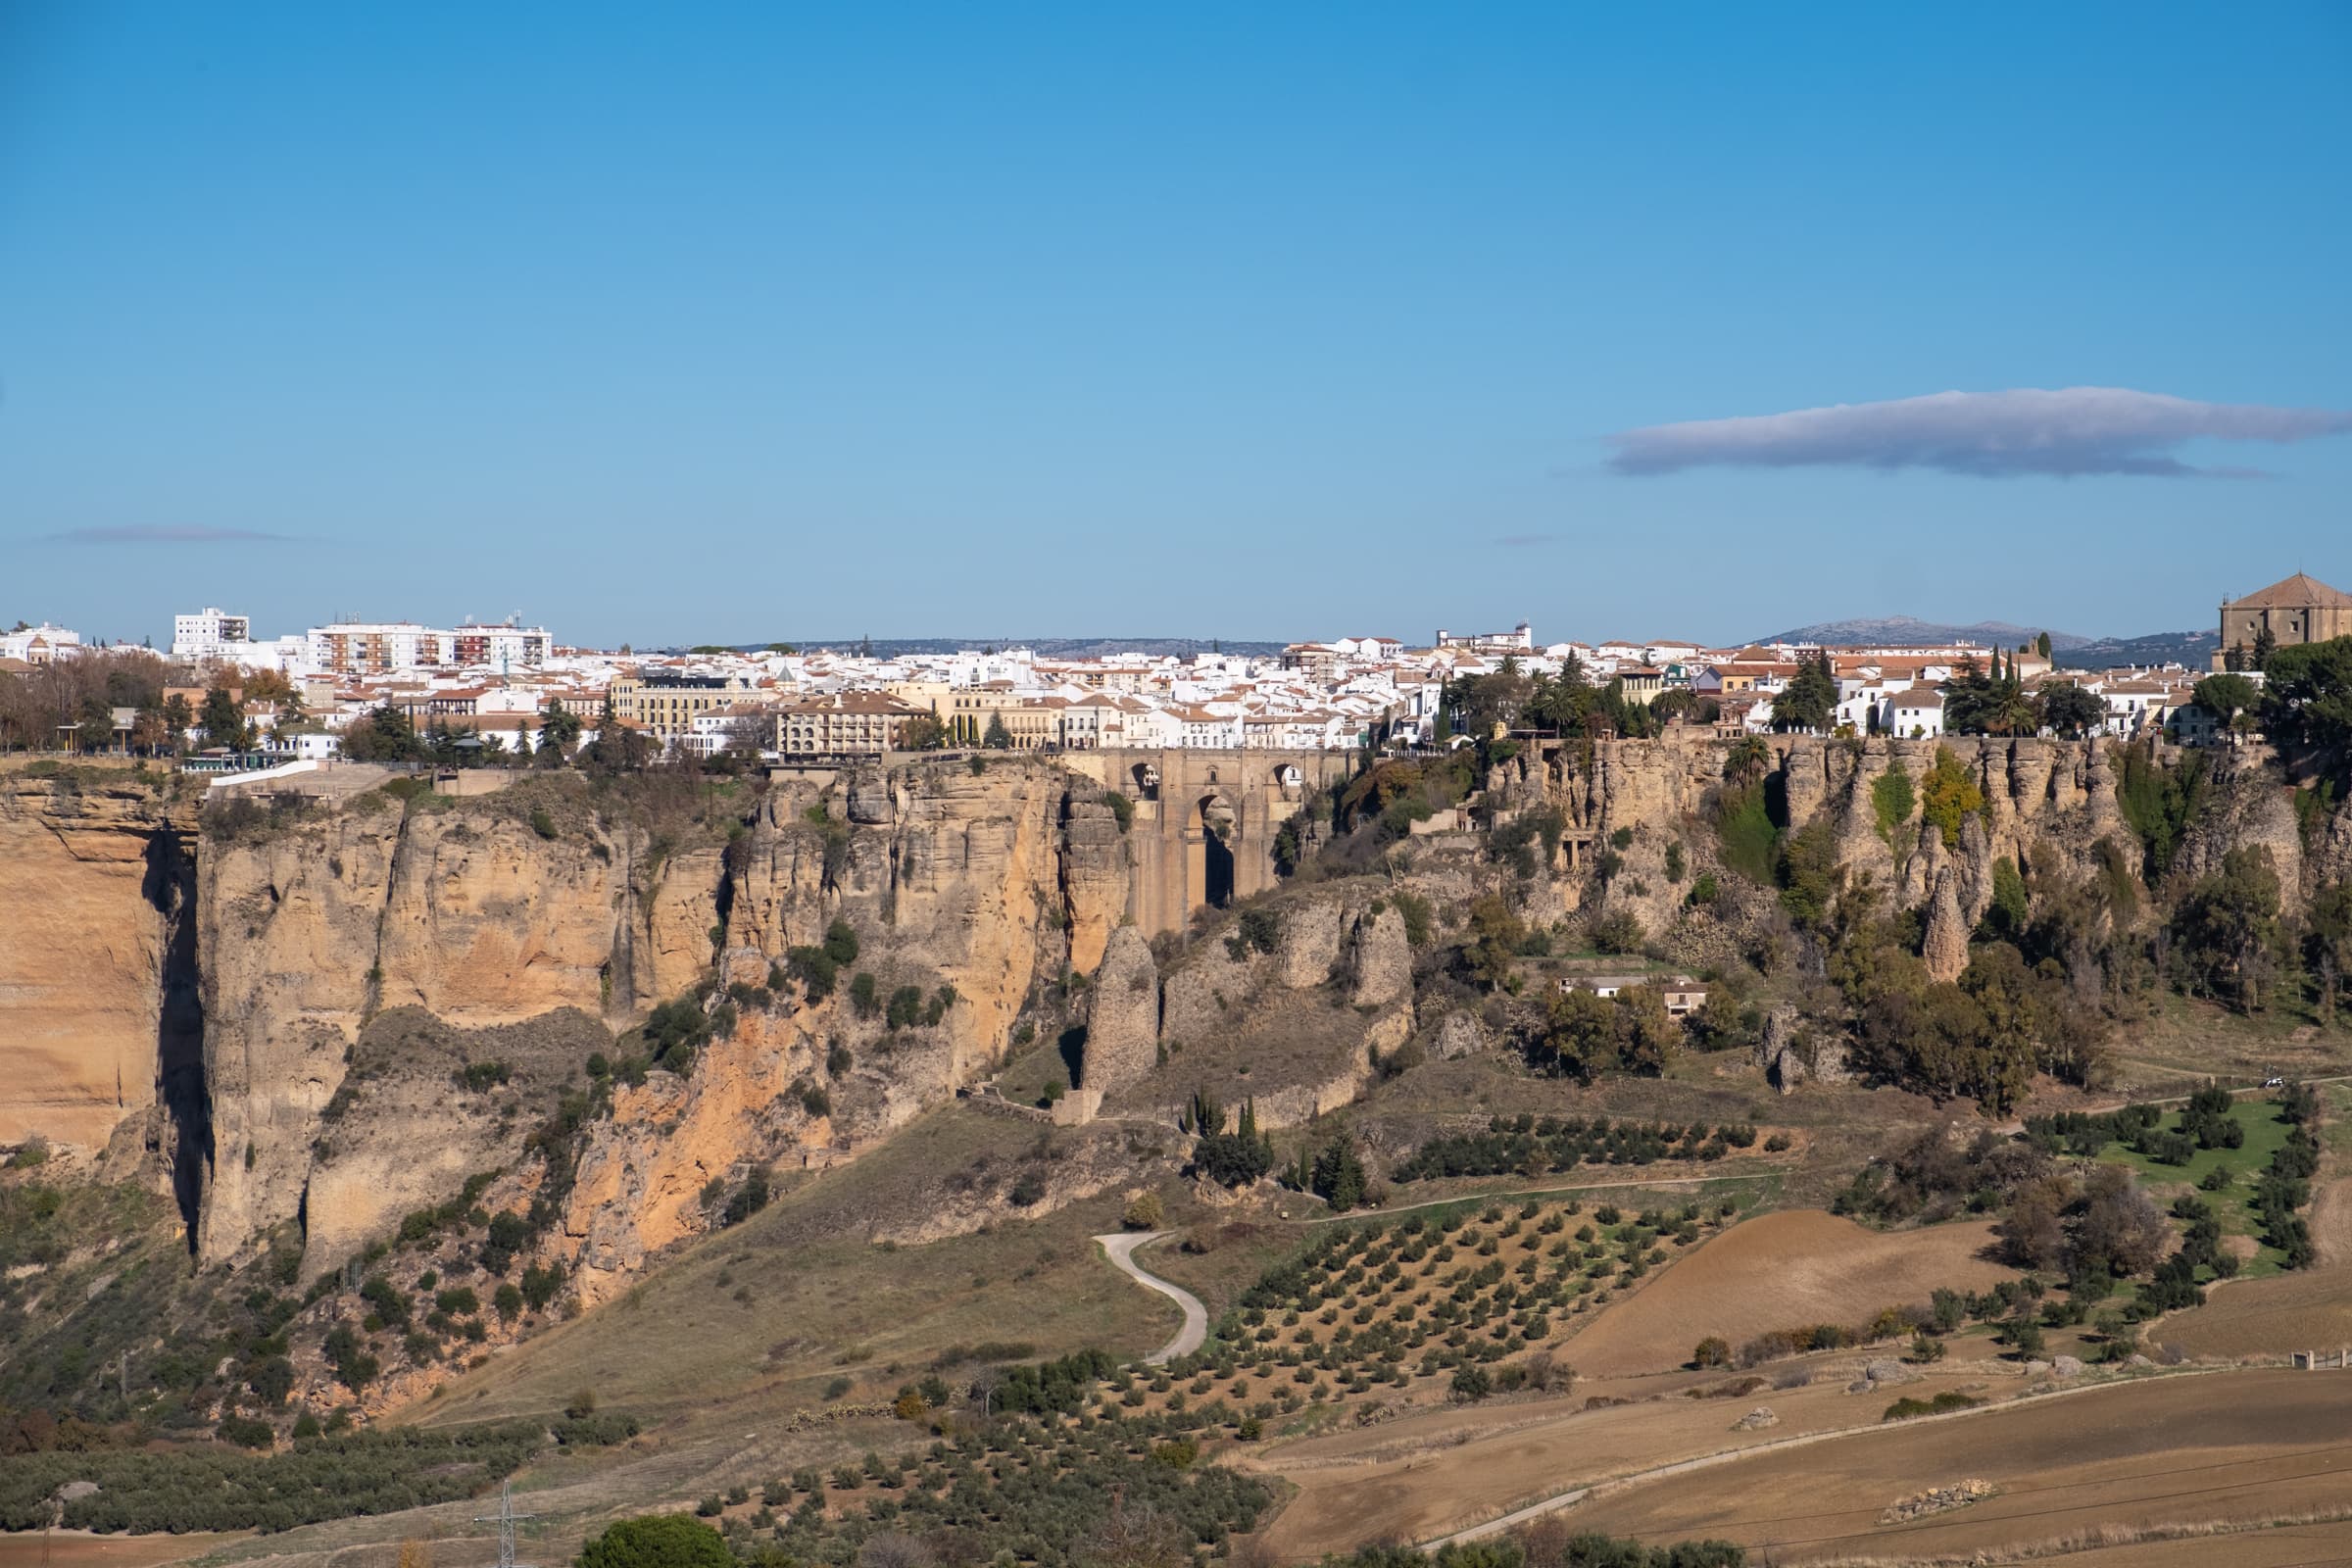 The view of Ronda from Villa Apolo